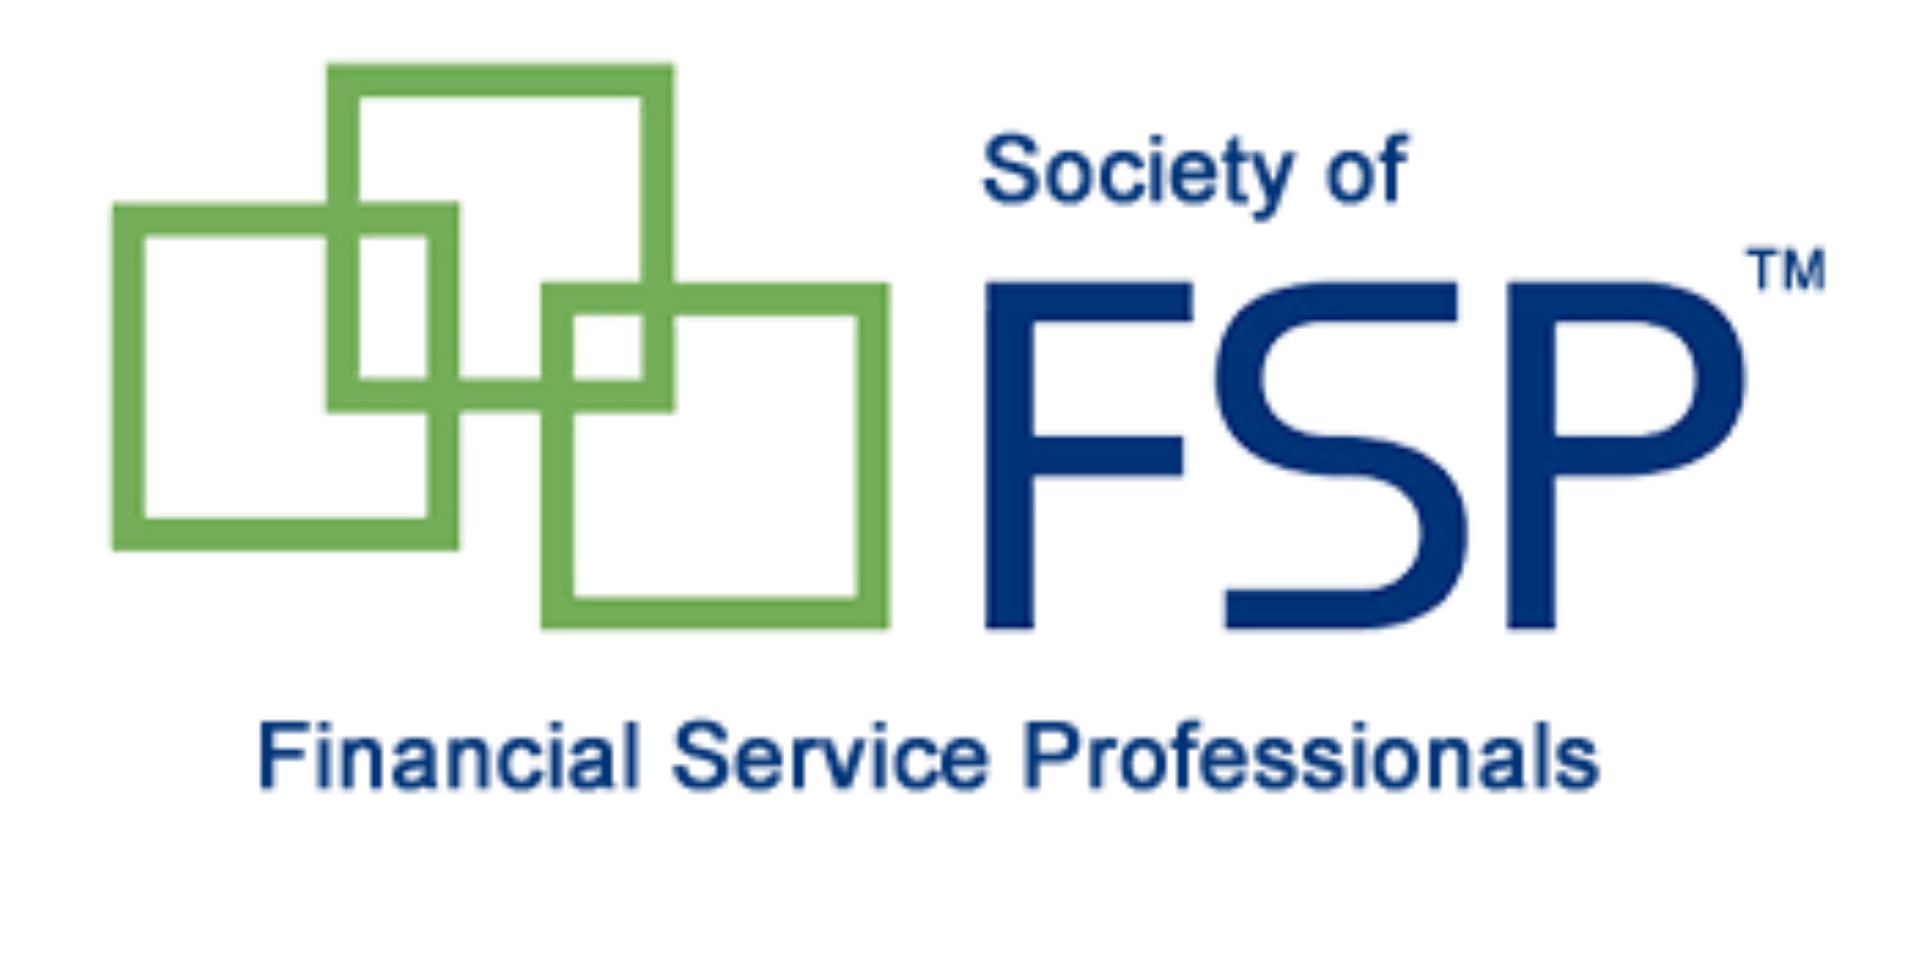 NAIFA Partner The Society of Financial Service Professionals (FSP)